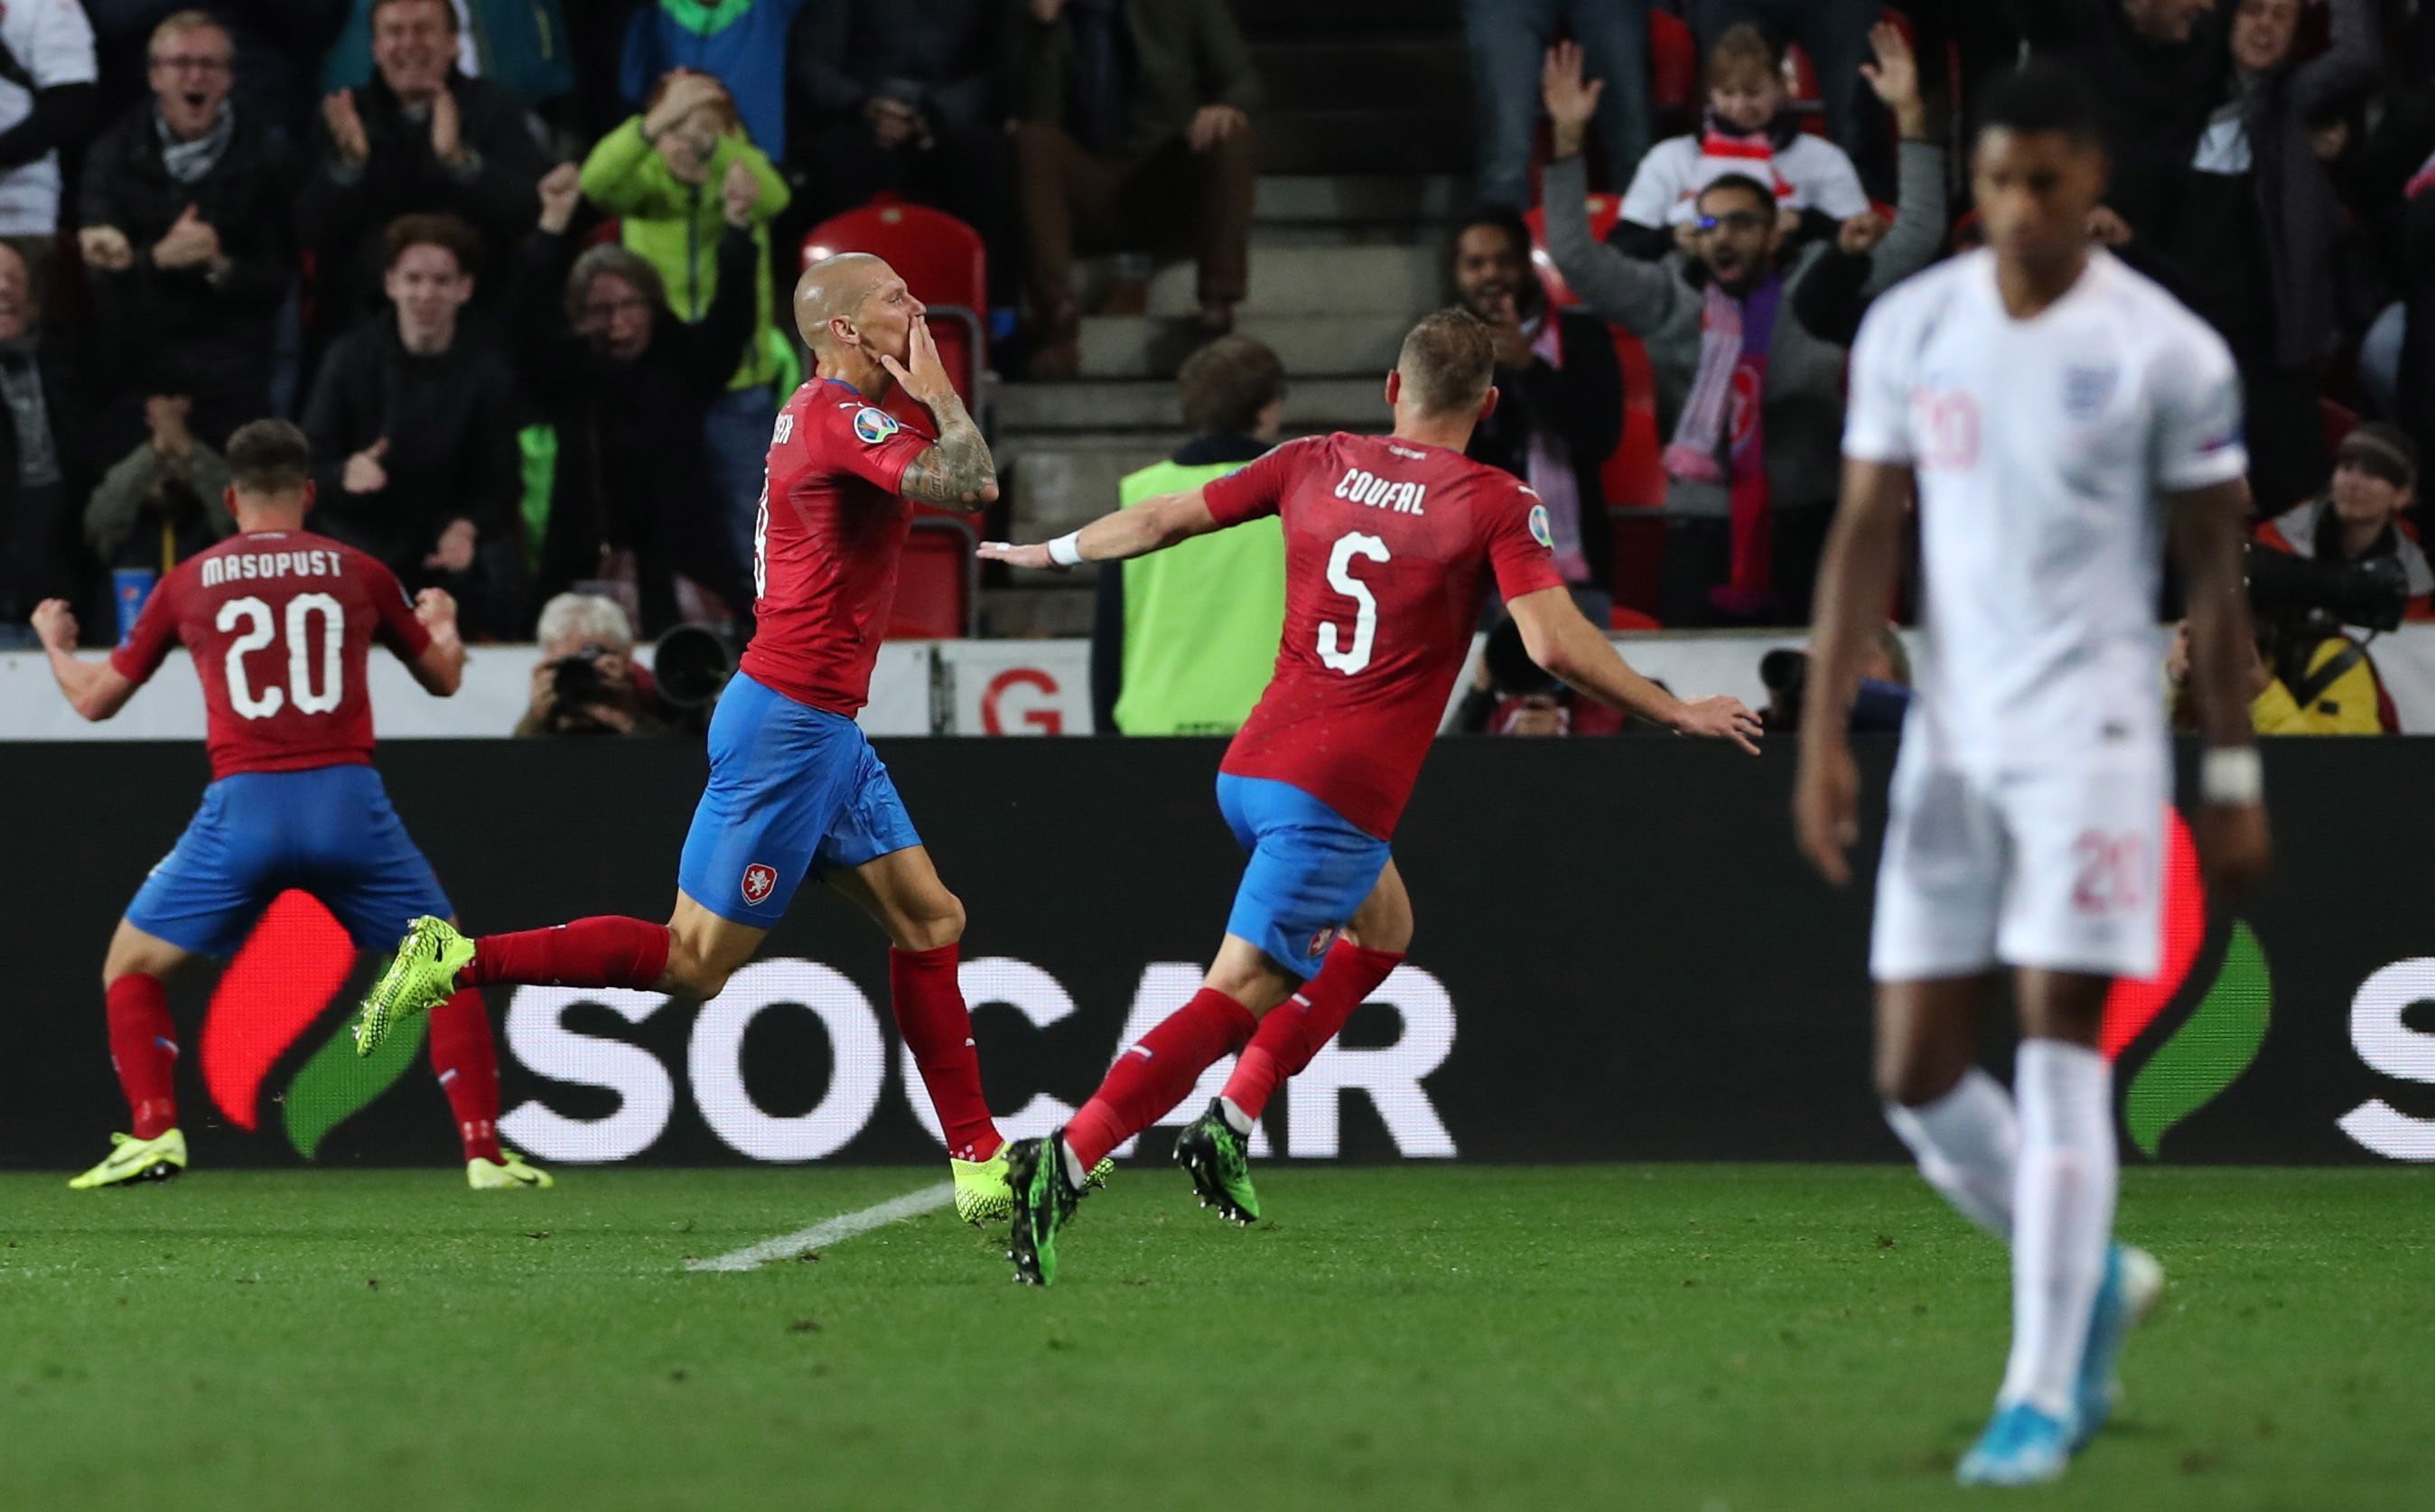 Chequia venció, por primera vez, 2-1 a Inglaterra camino a la Euro 2020